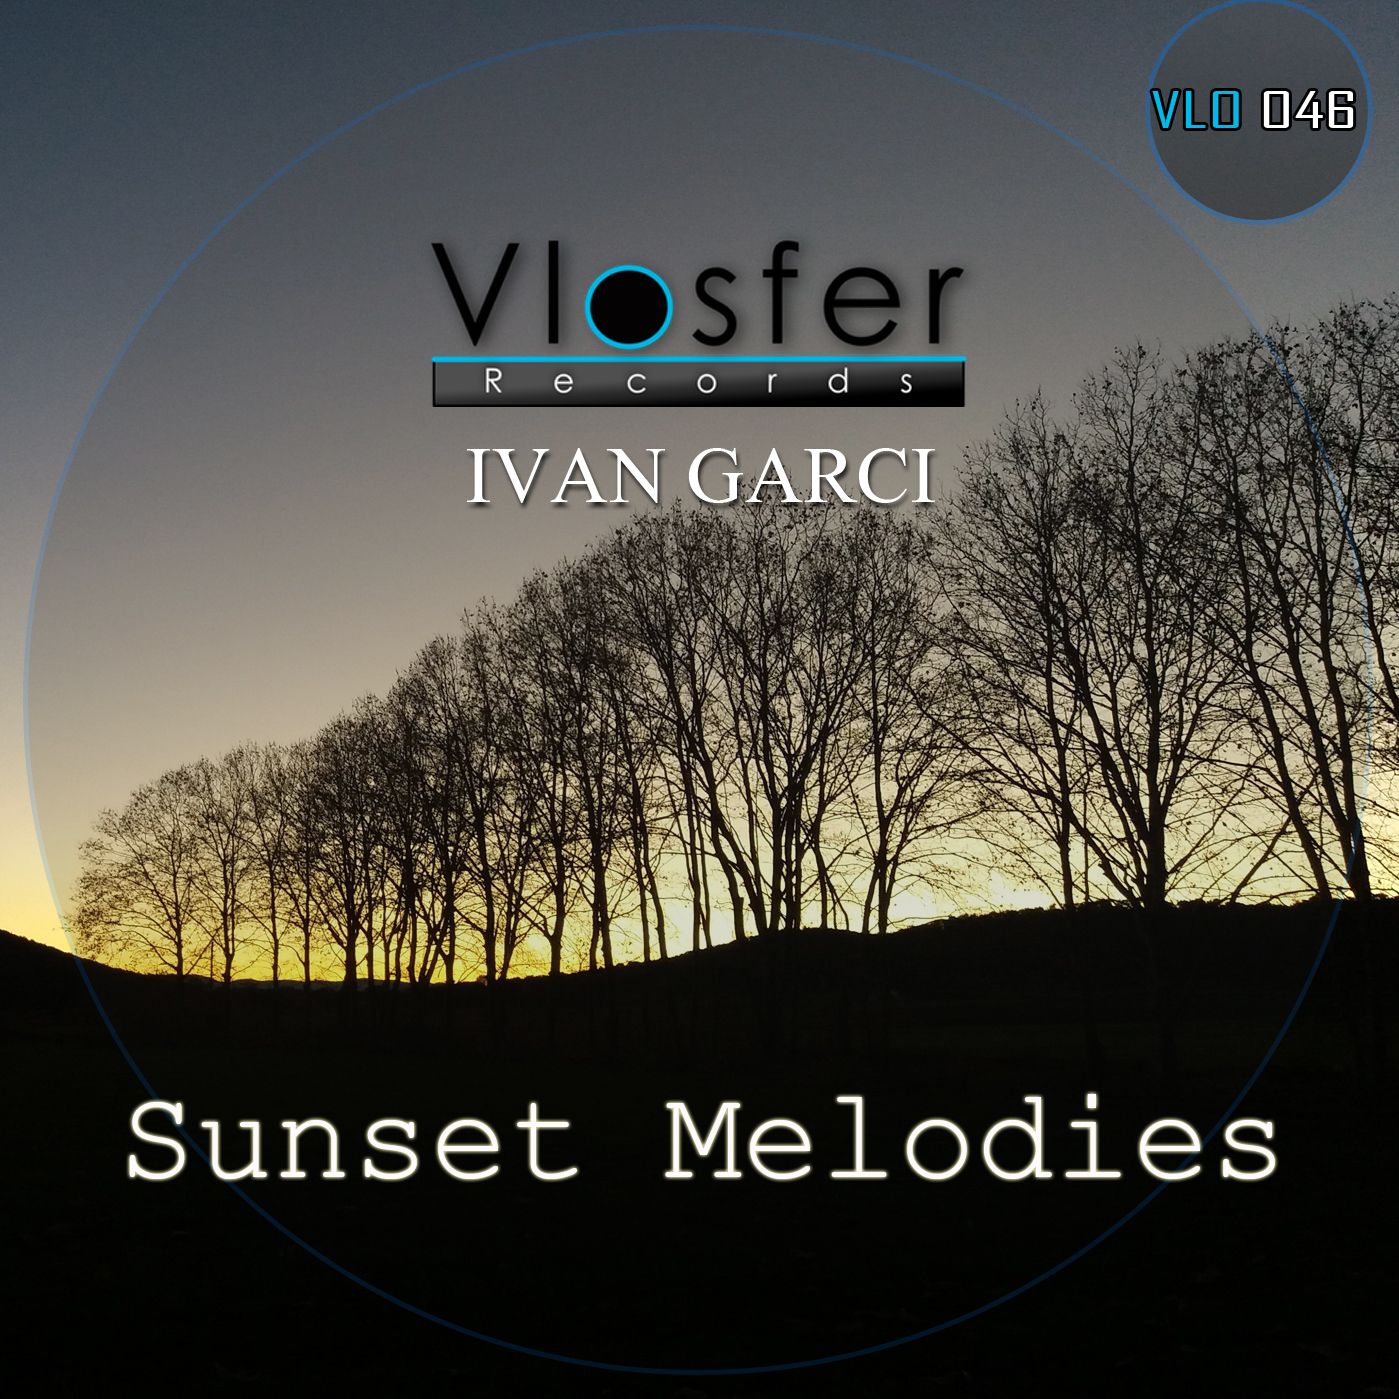 Khoasolla Clear - Ivan Garci (low quality sound) Vlosfer records.